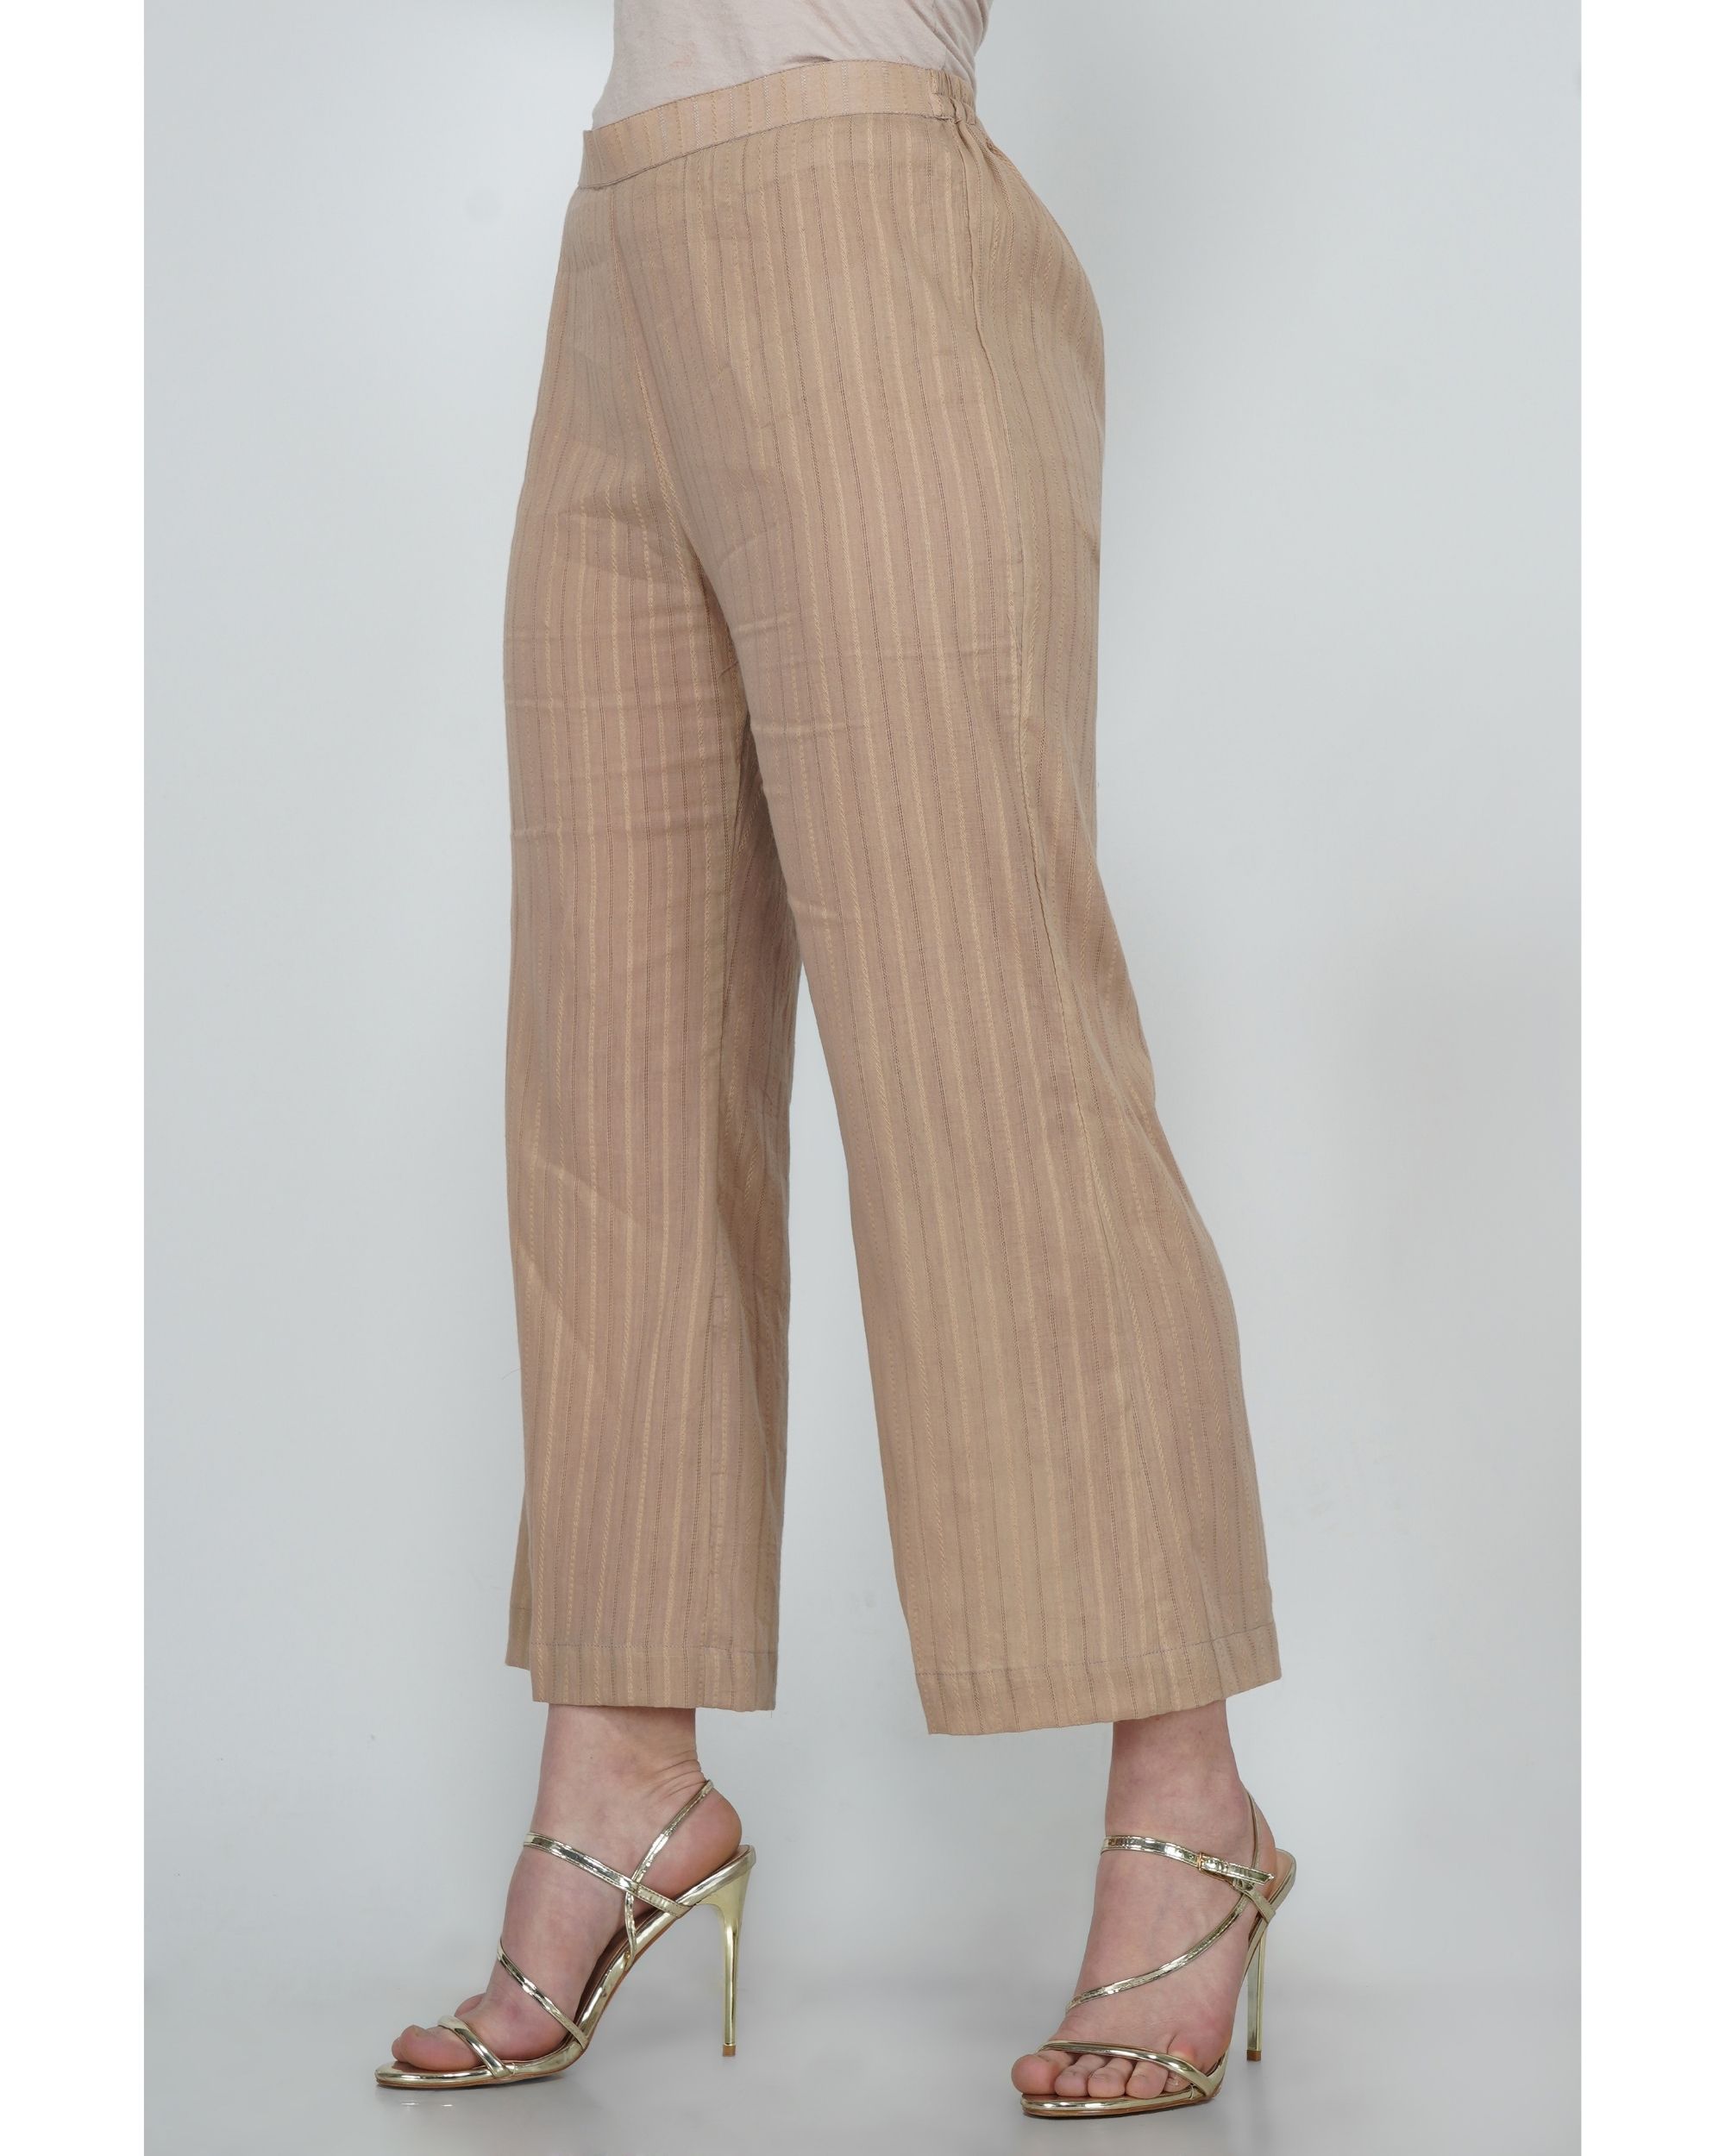 Champagne striped leno cotton pants by Vintage Loom | The Secret Label